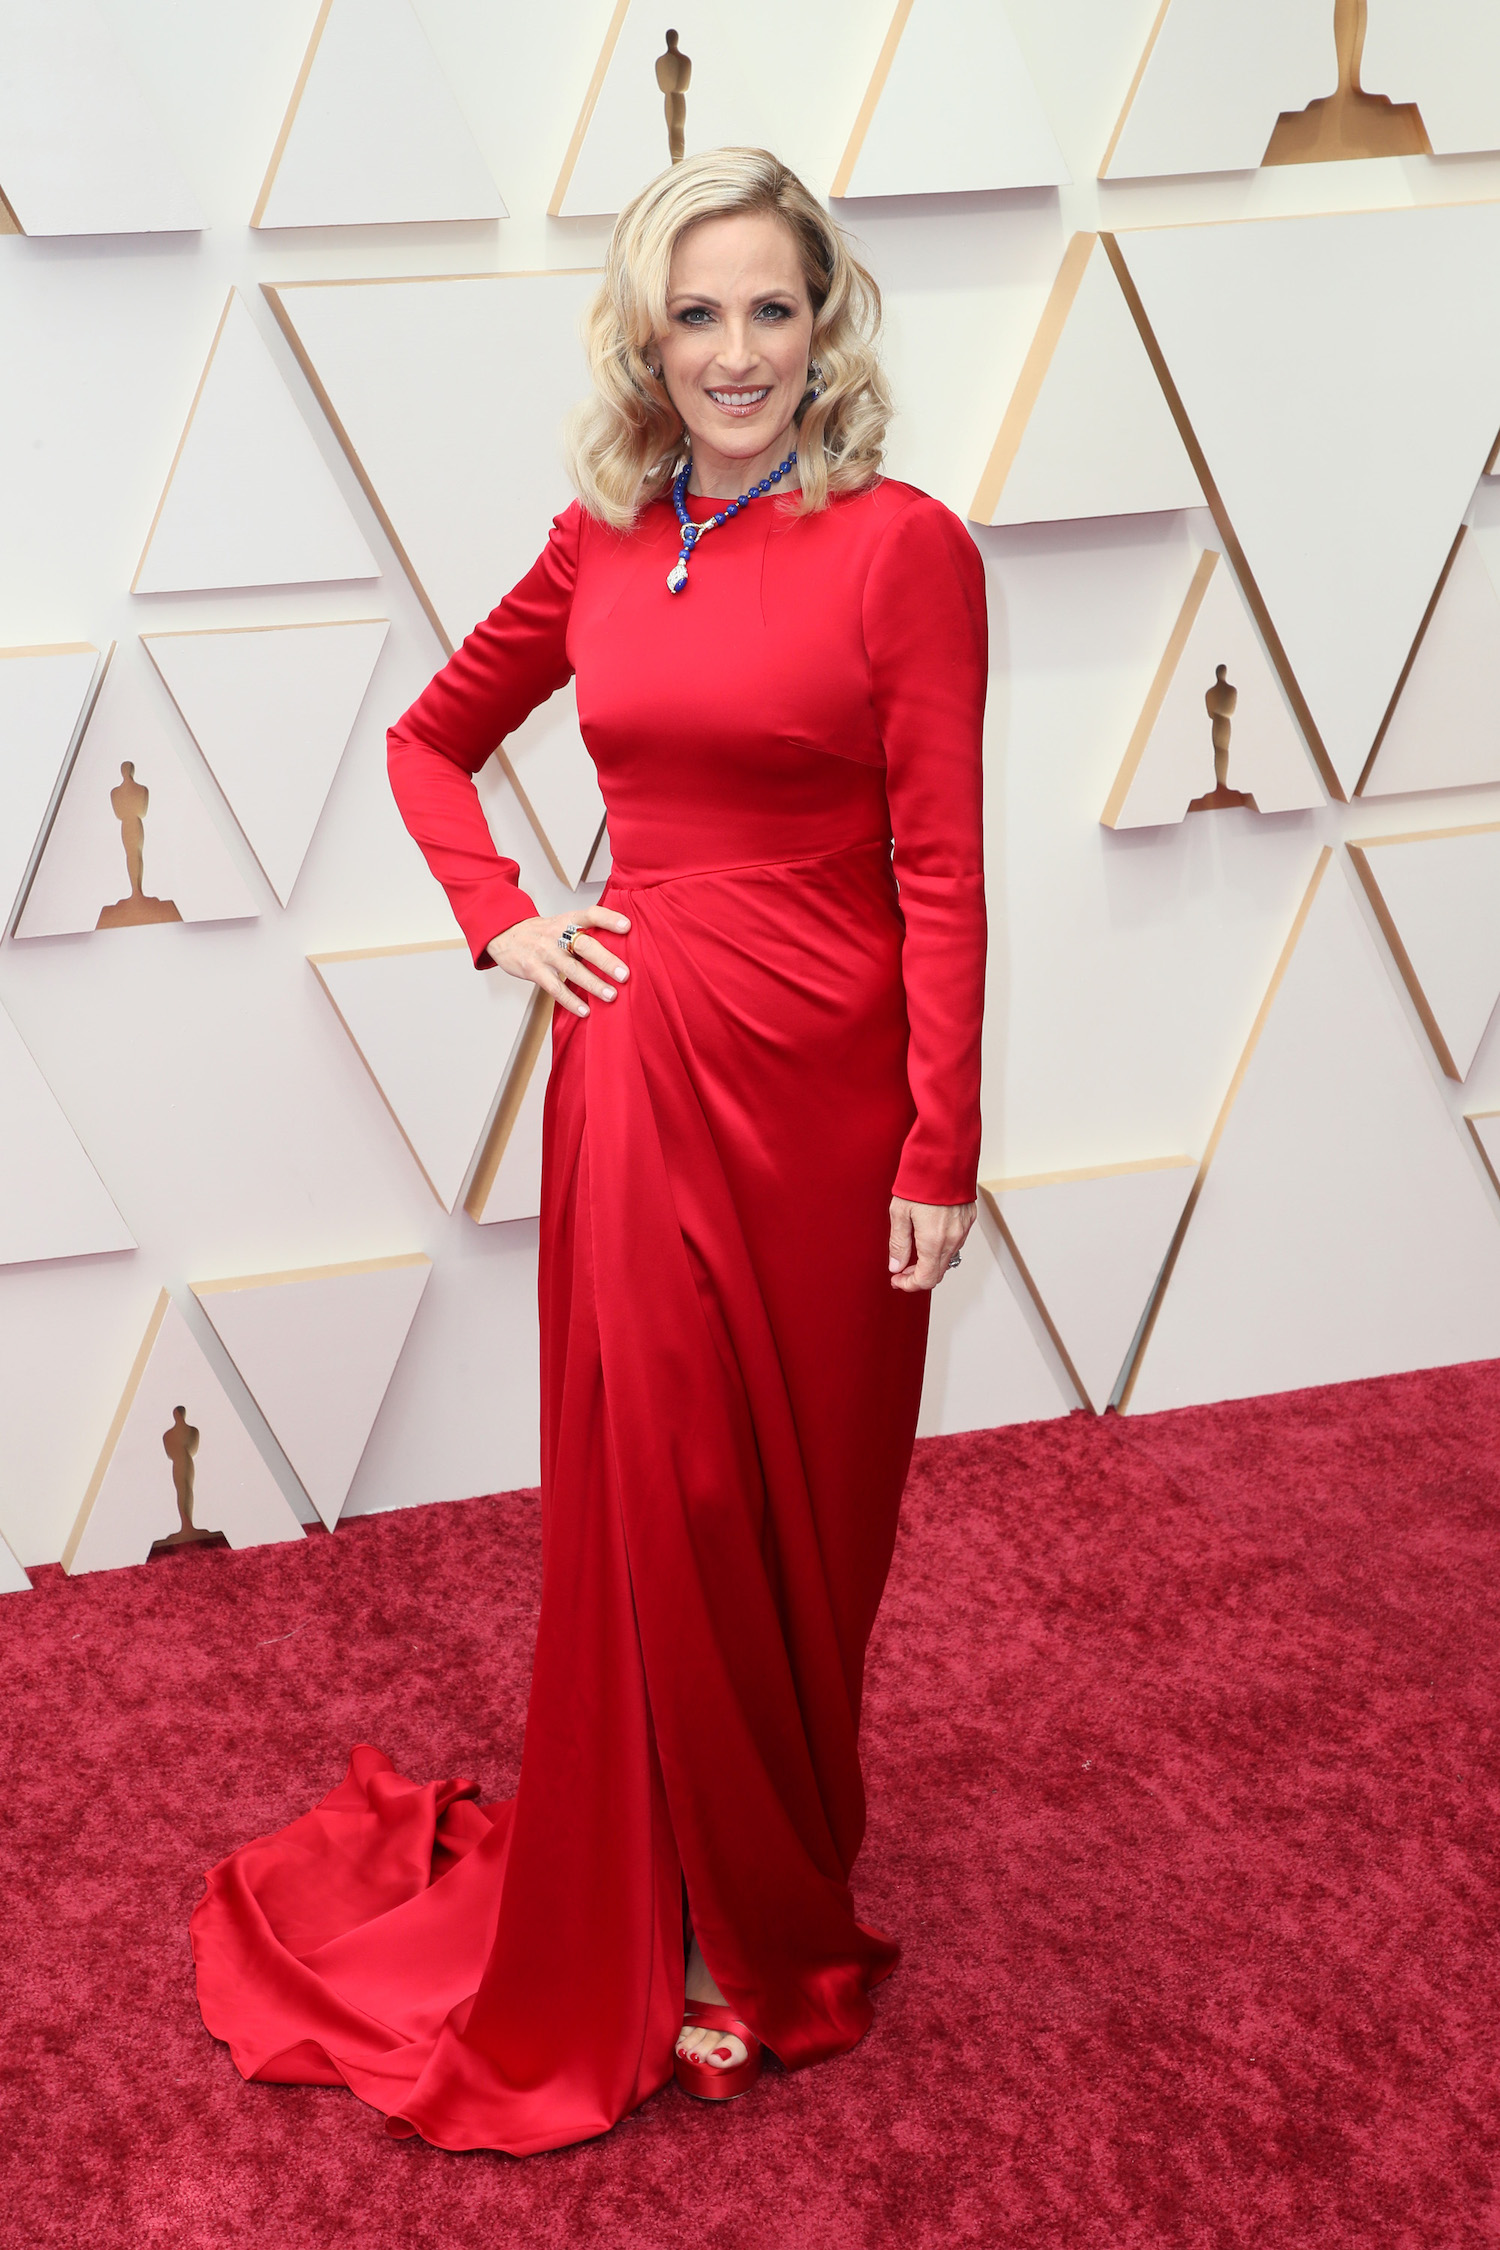 Marlee Matlin at the Oscars 2022